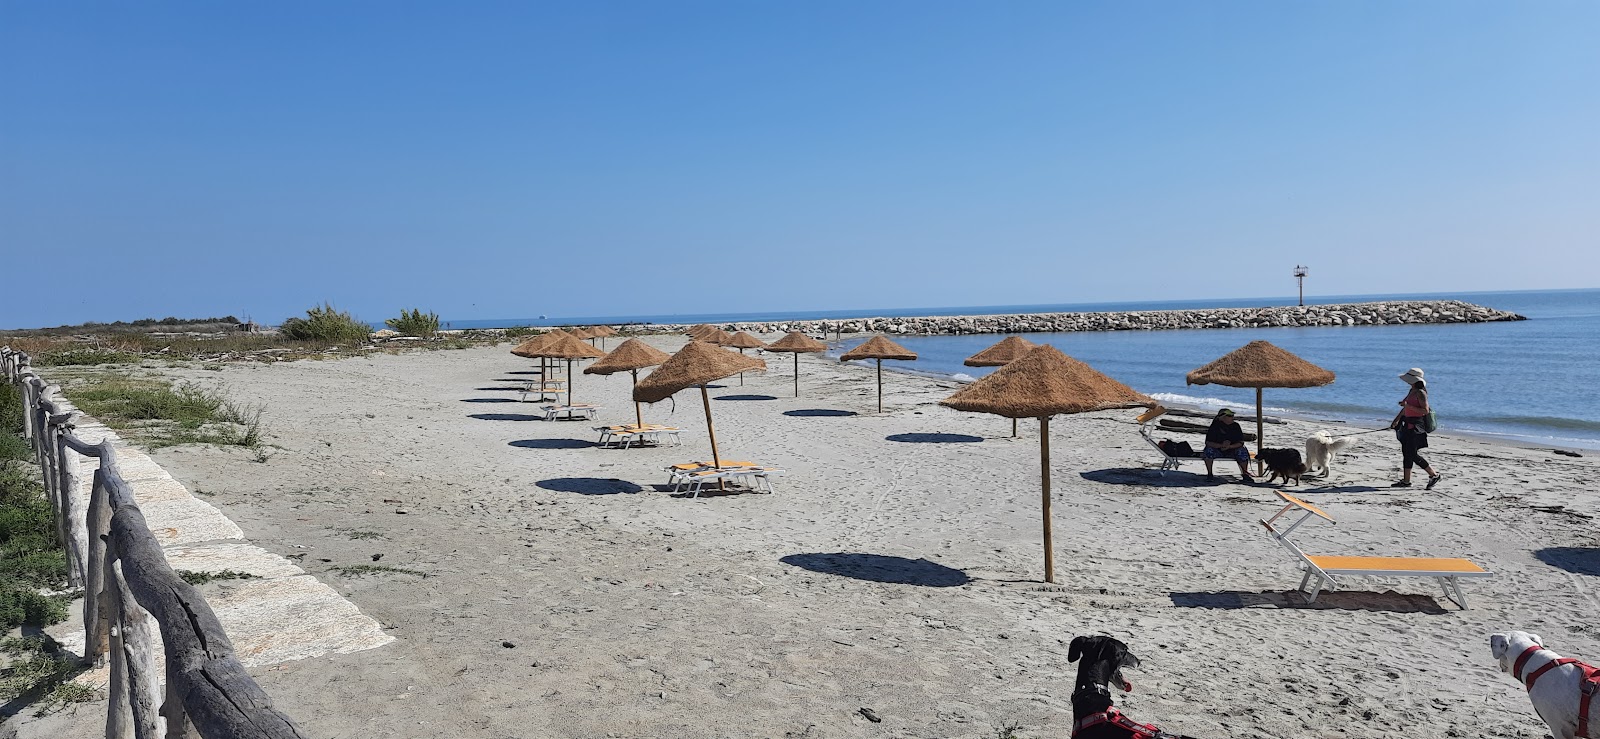 Foto av Spiaggia dell'Isola dell'Amore med rymlig strand